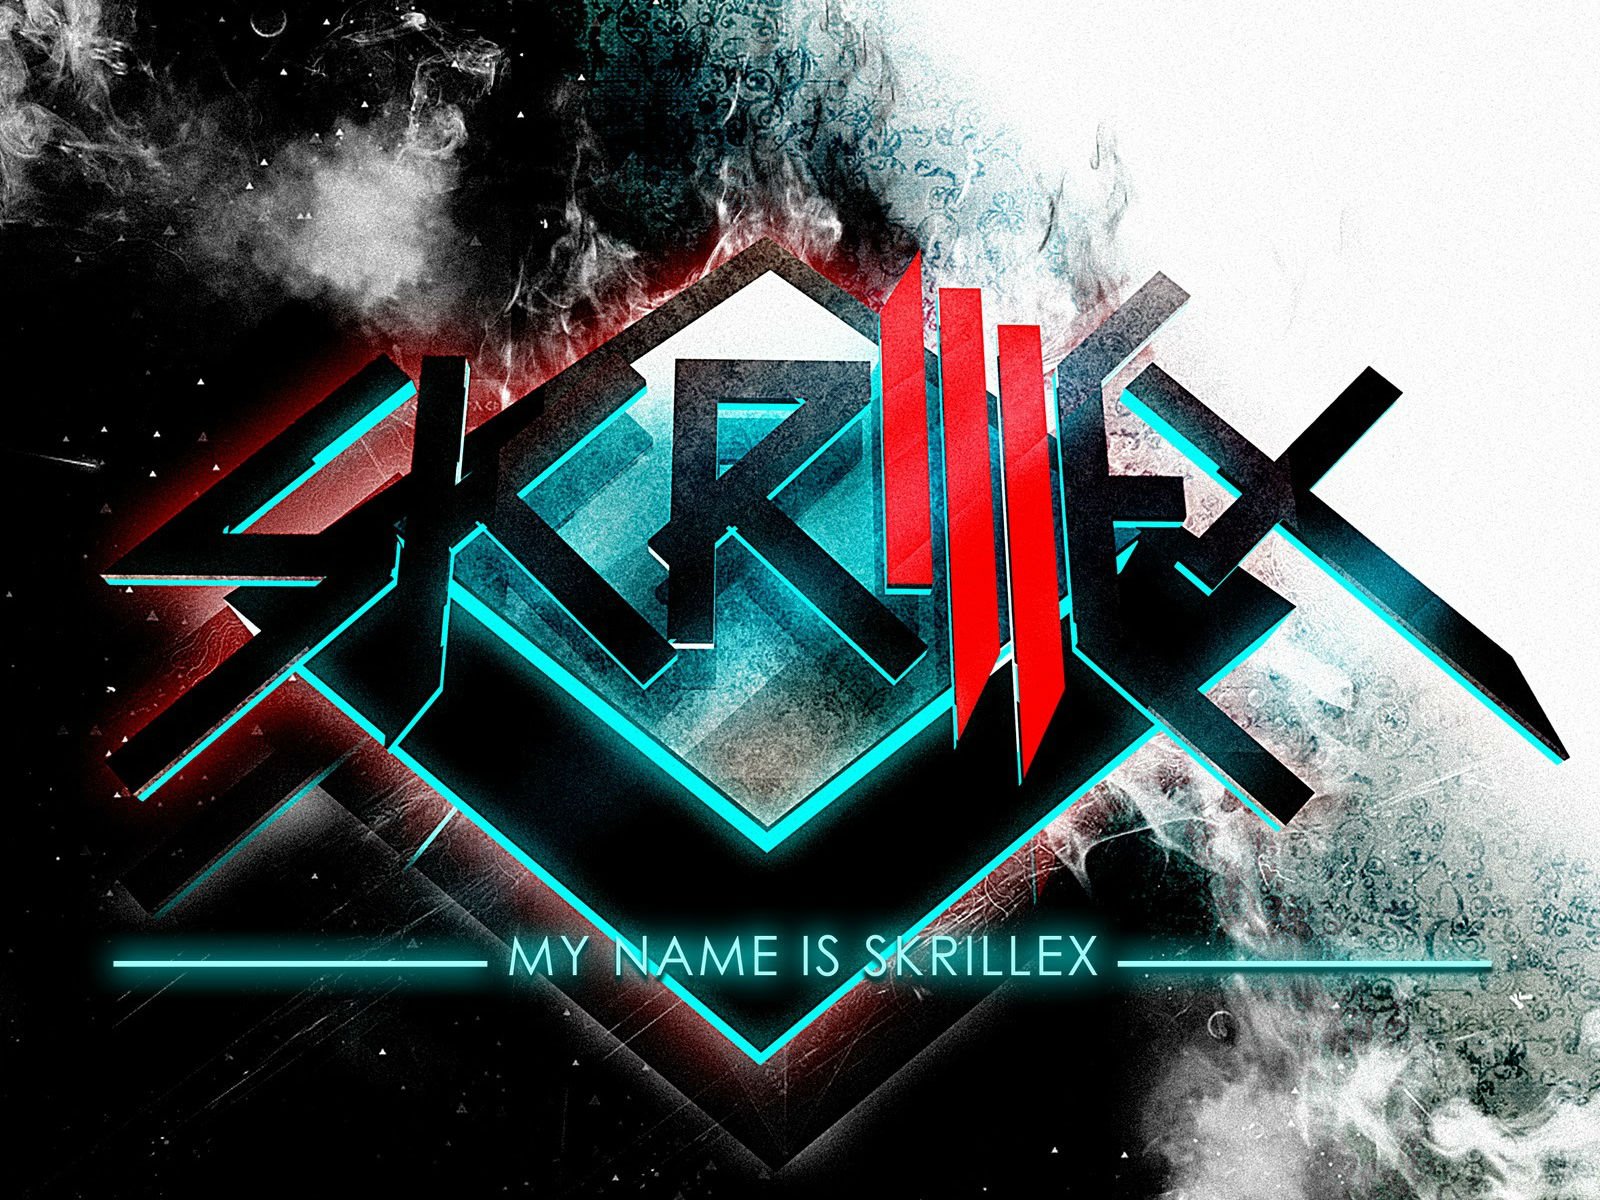 skrillex, Dubstep, Electro, House, Dance, Disco, Electronic, Robot, Cyborg, Poster Wallpaper